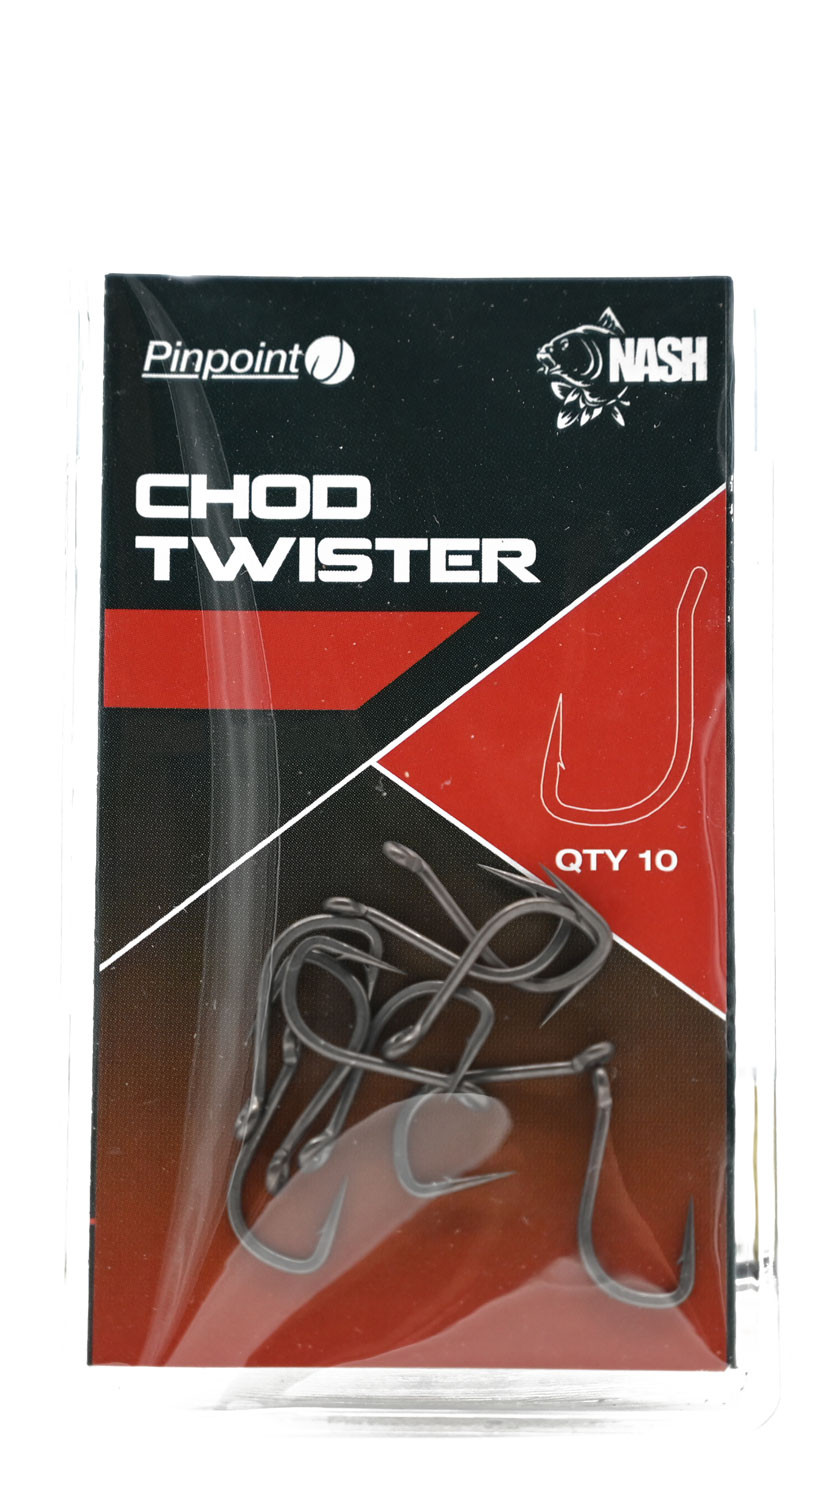 Nash Chod Twister